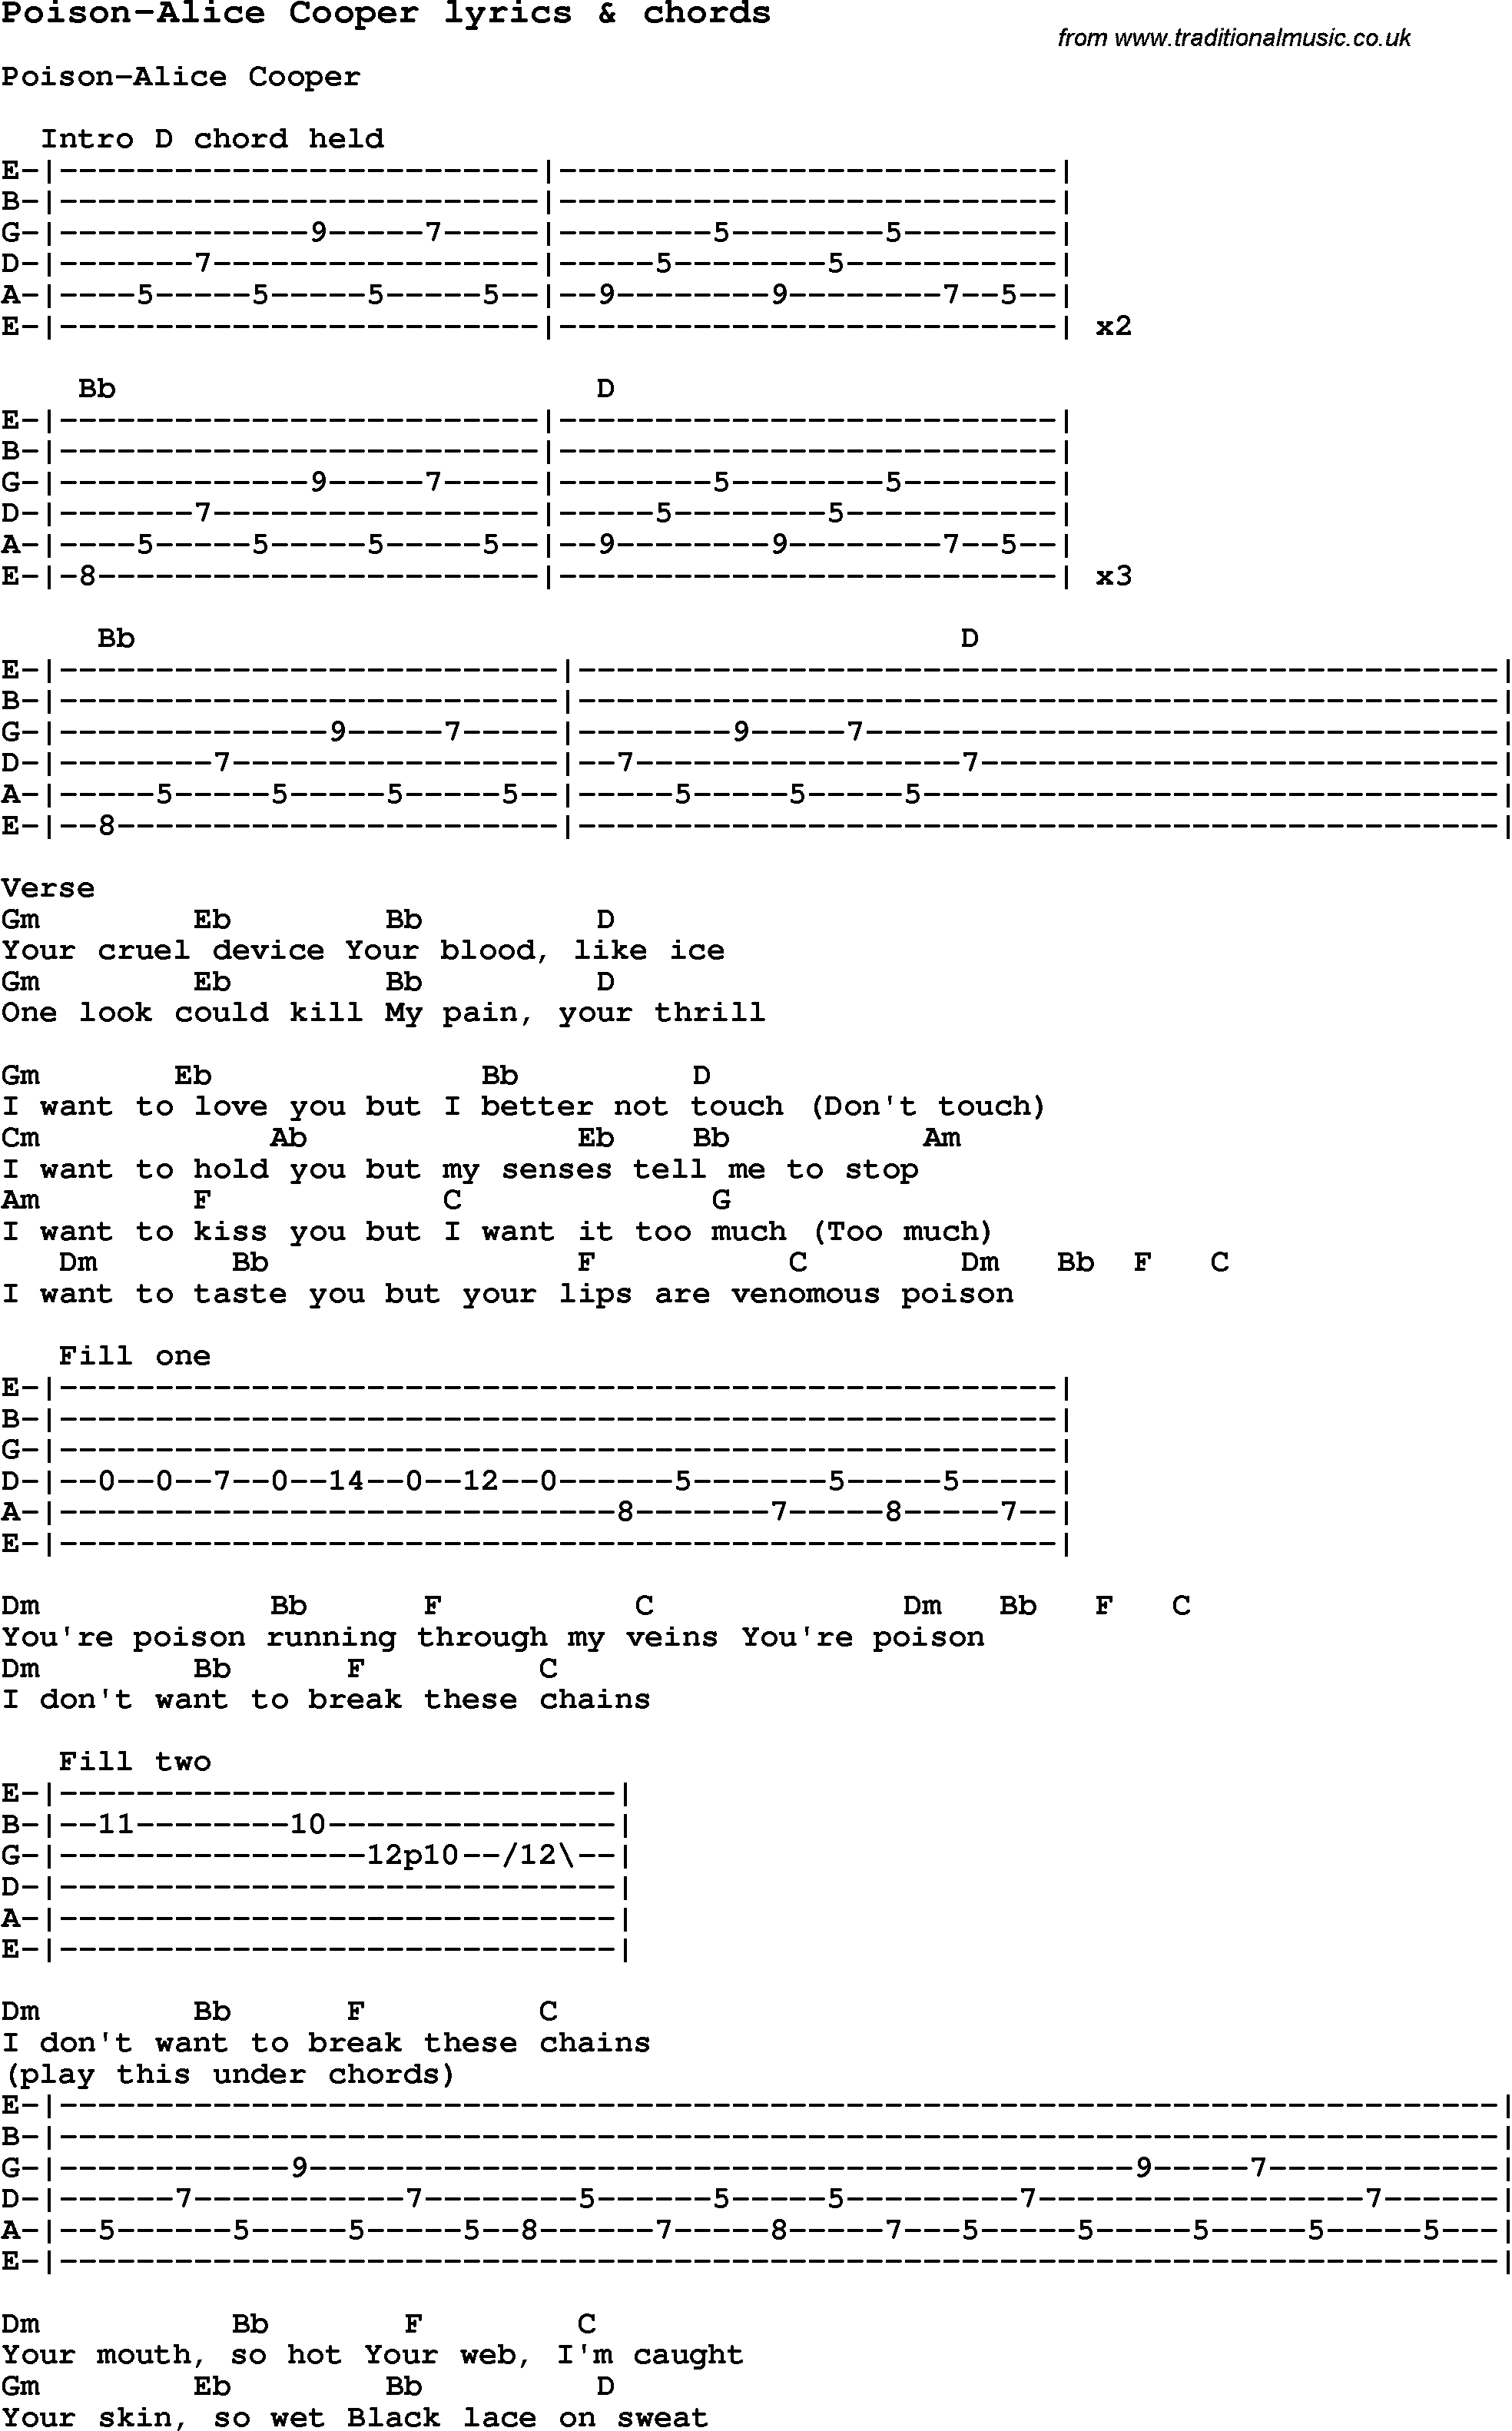 Love Song Lyrics for: Poison-Alice Cooper with chords for Ukulele, Guitar Banjo etc.